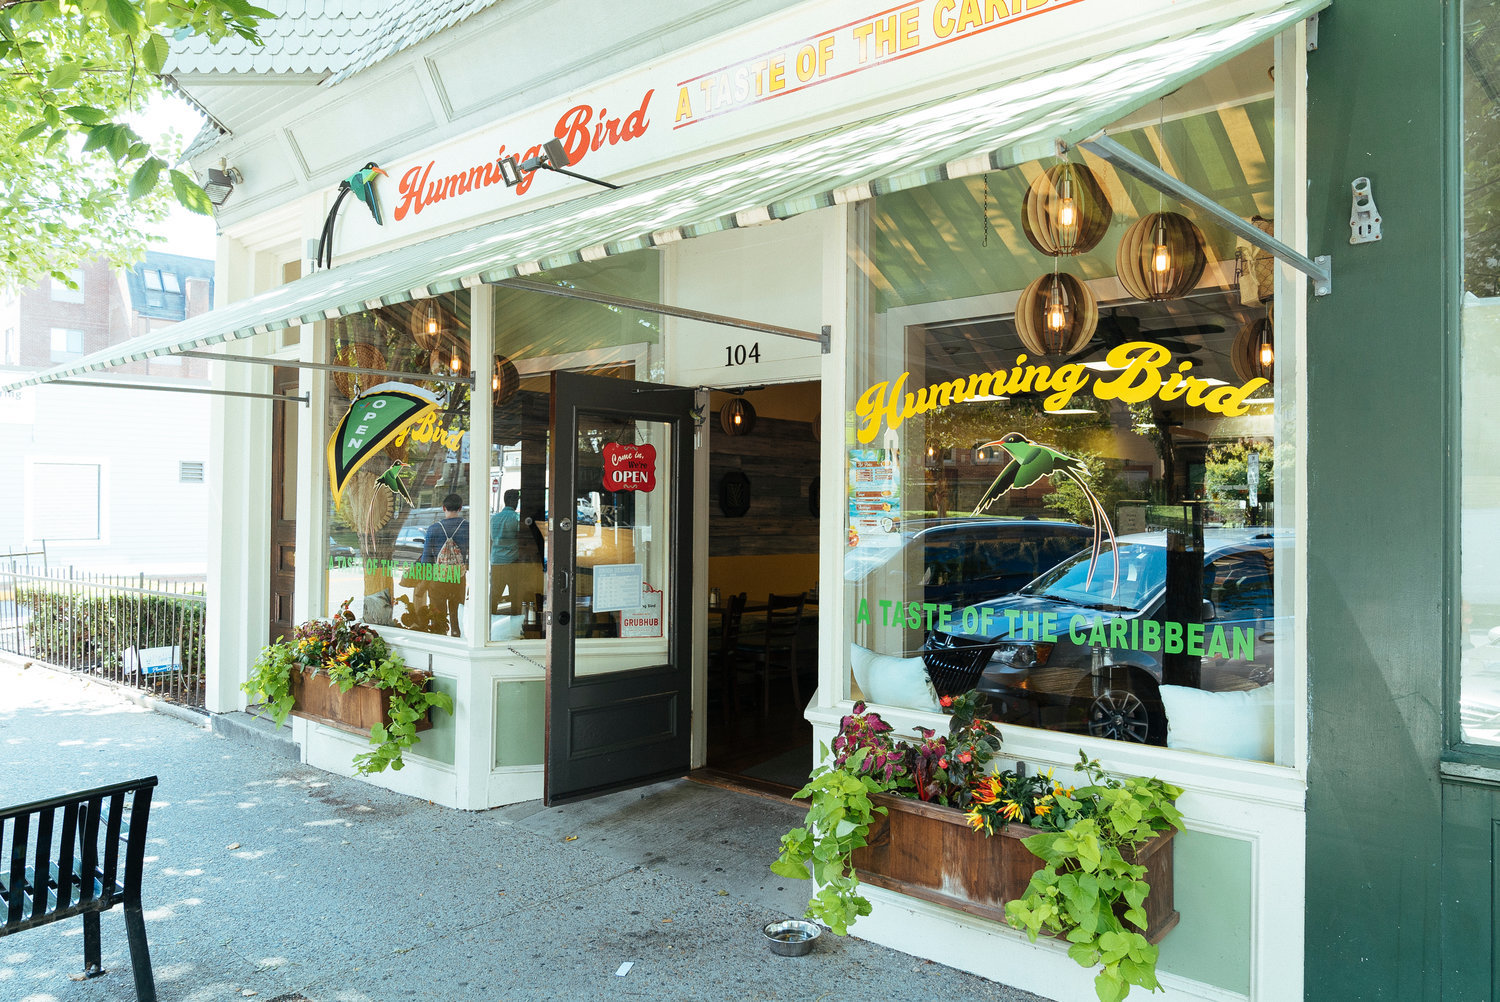 Humming Bird, a Jamaican restaurant in Newport